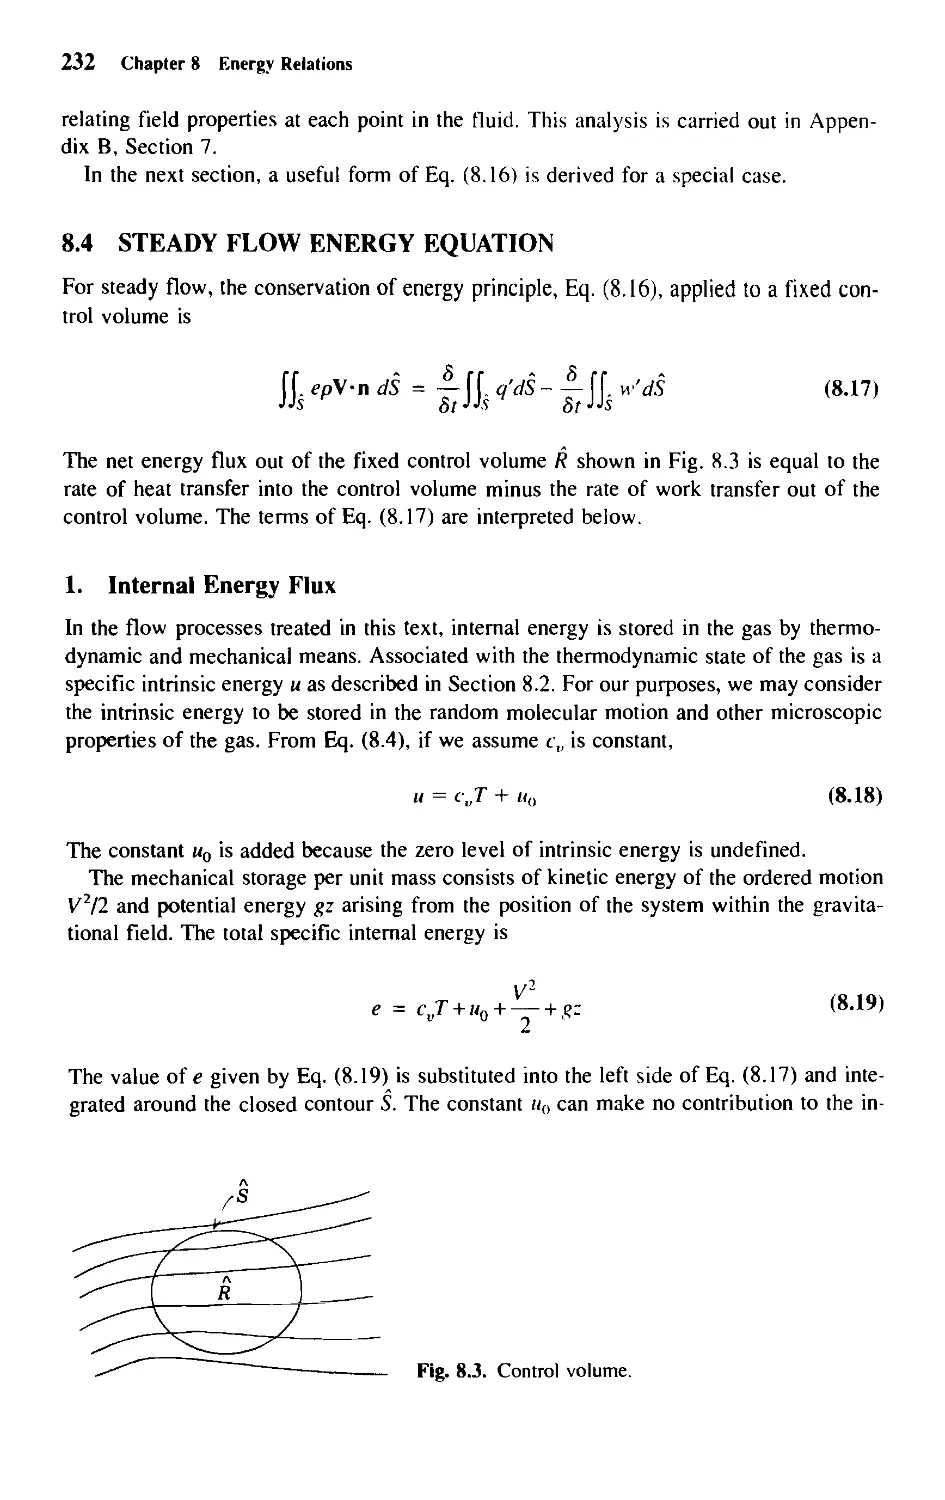 8.4 - Steady Flow Energy Equation